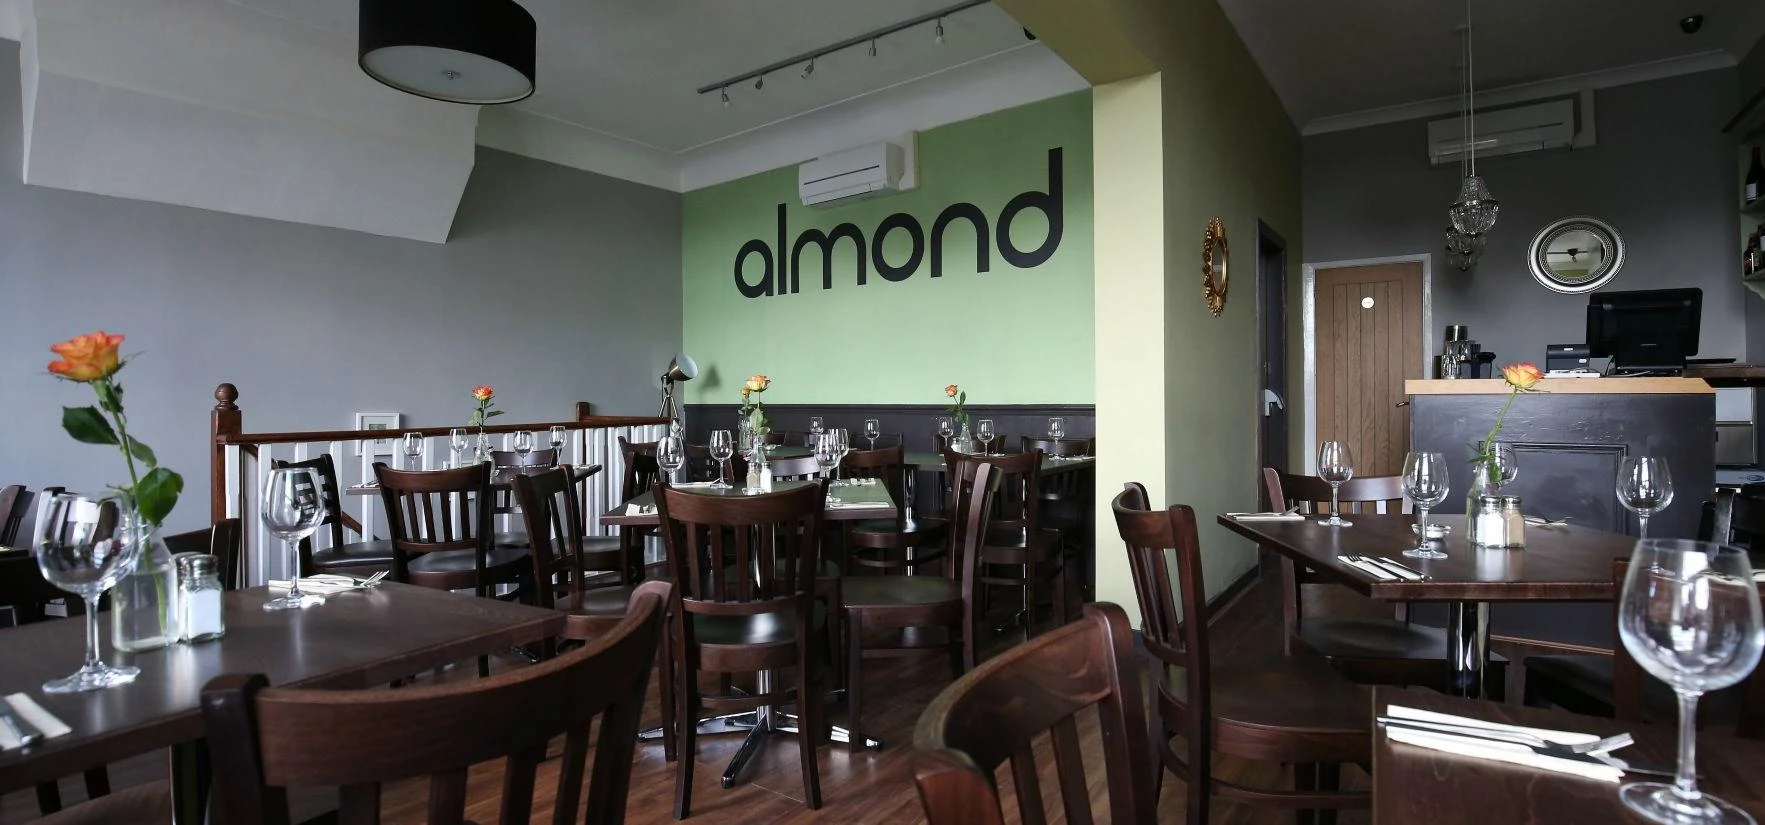 Almond Restaurant & Bar